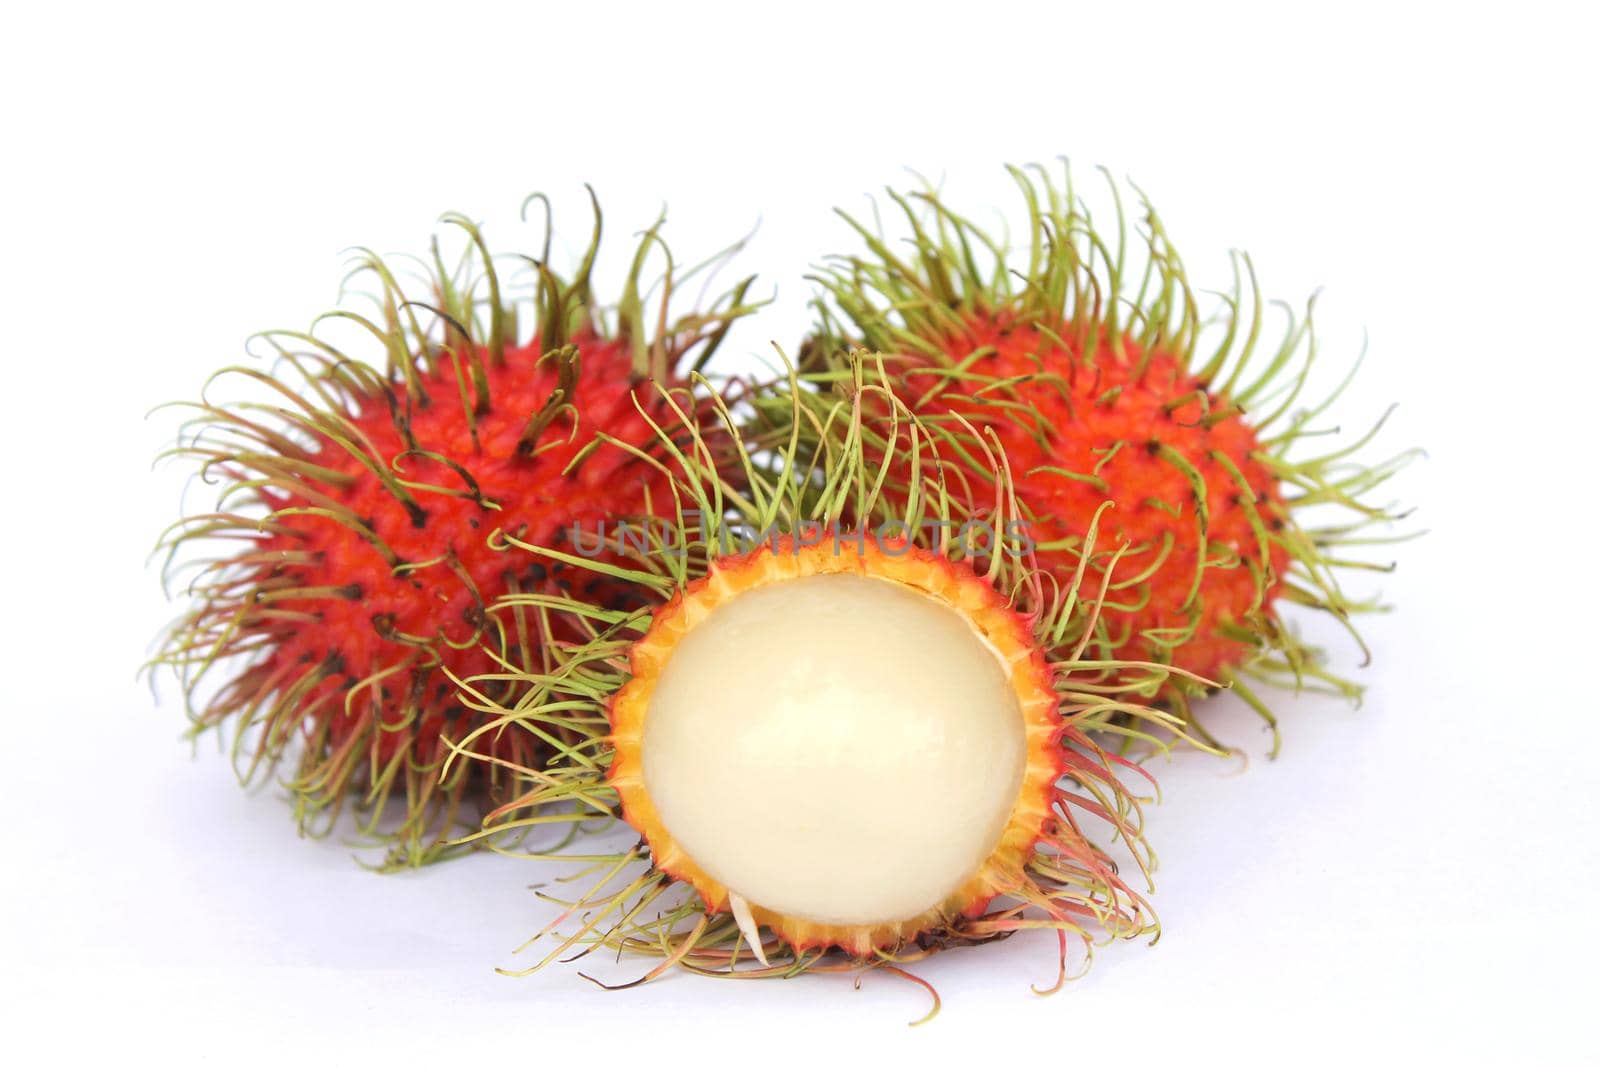 Delicious sweet fruit rambutan isolated on white background, peeled rambutan reveals white fruit pulp inside.